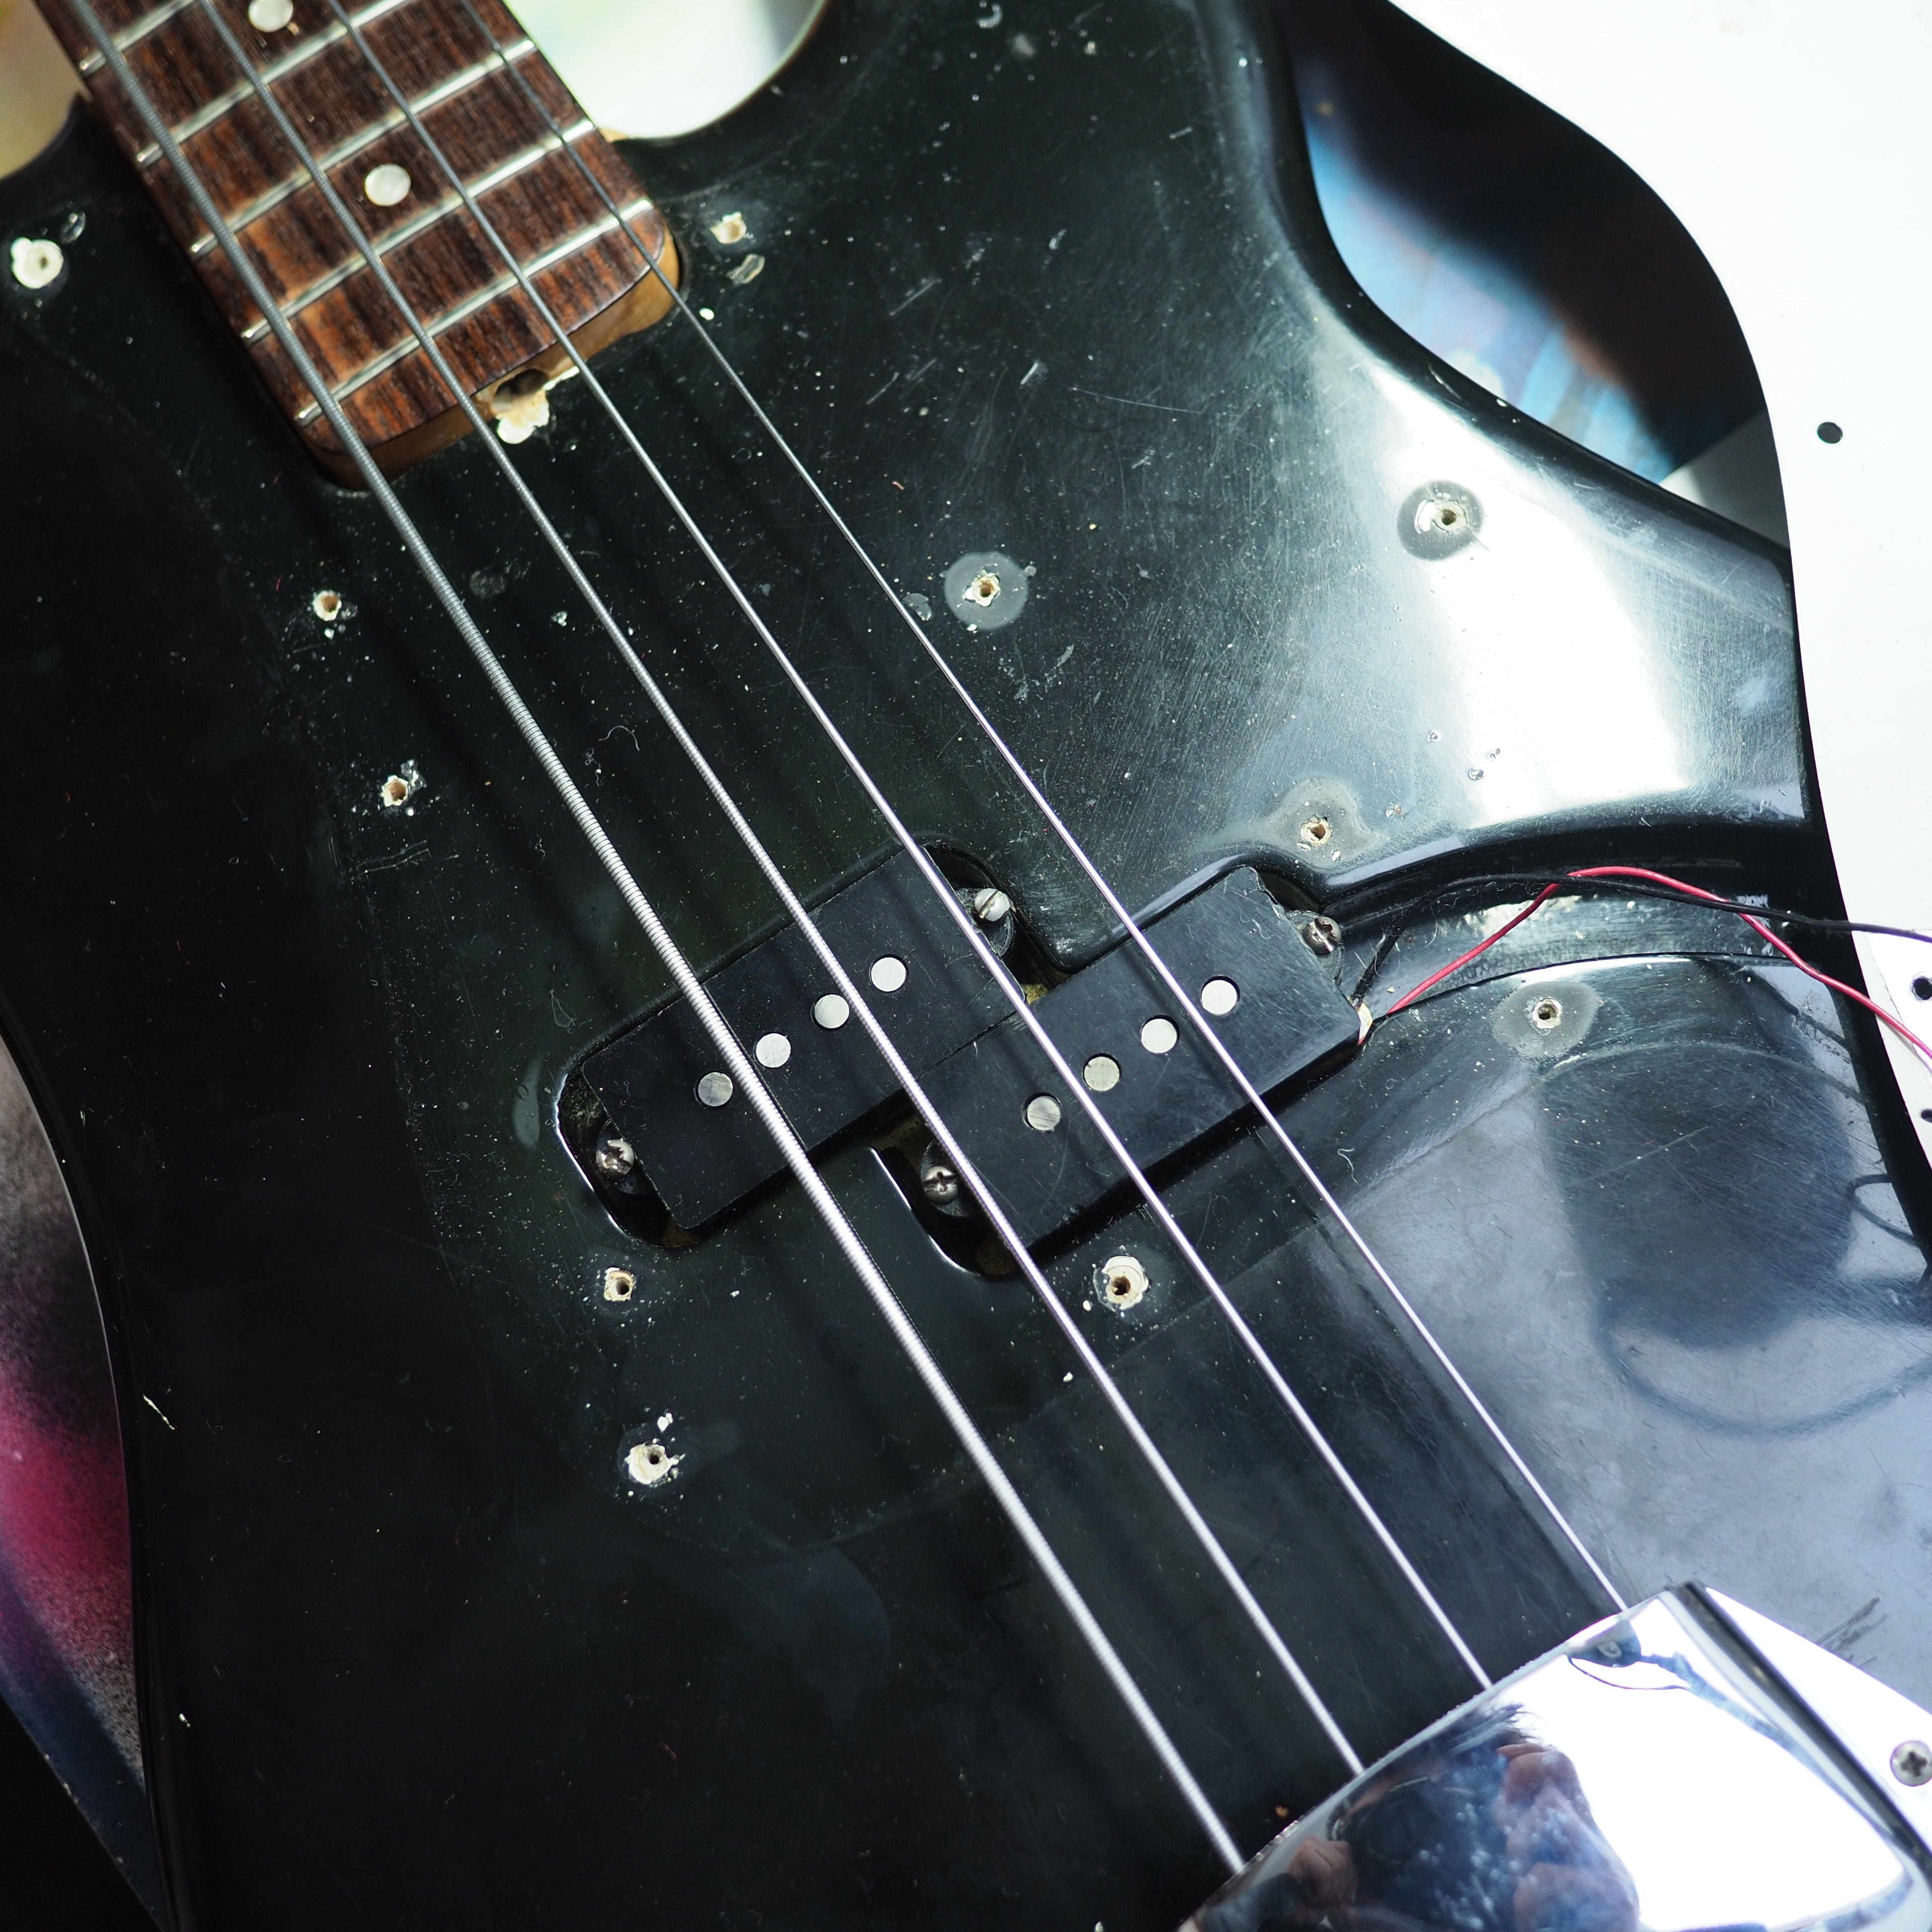 1977 Fender Precision Bass - wurst.guitars